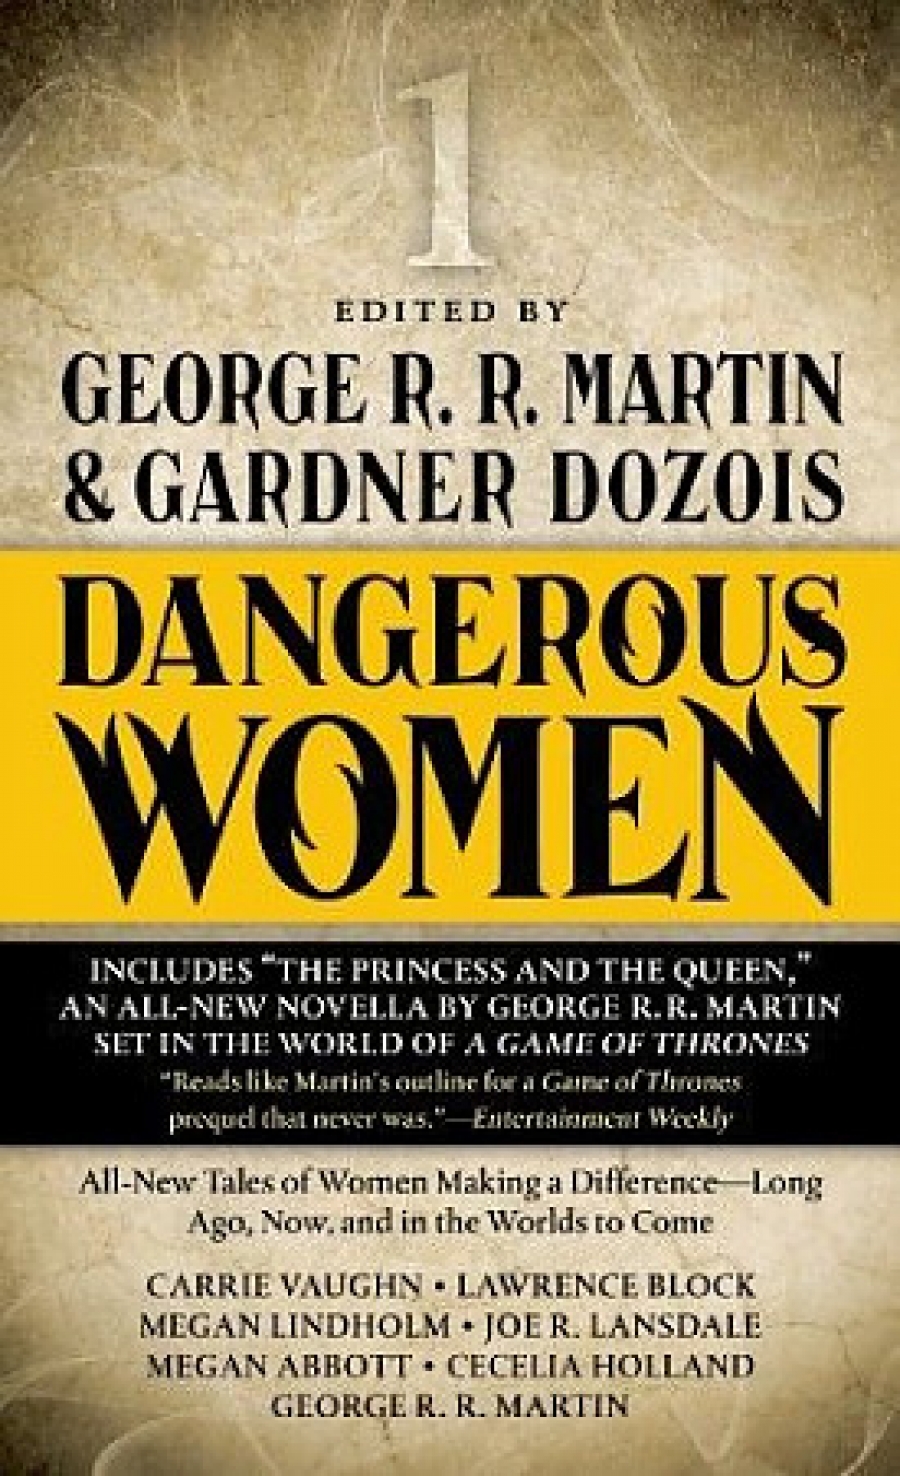 Martin, George R.R. (Editor) Dangerous Women 1 